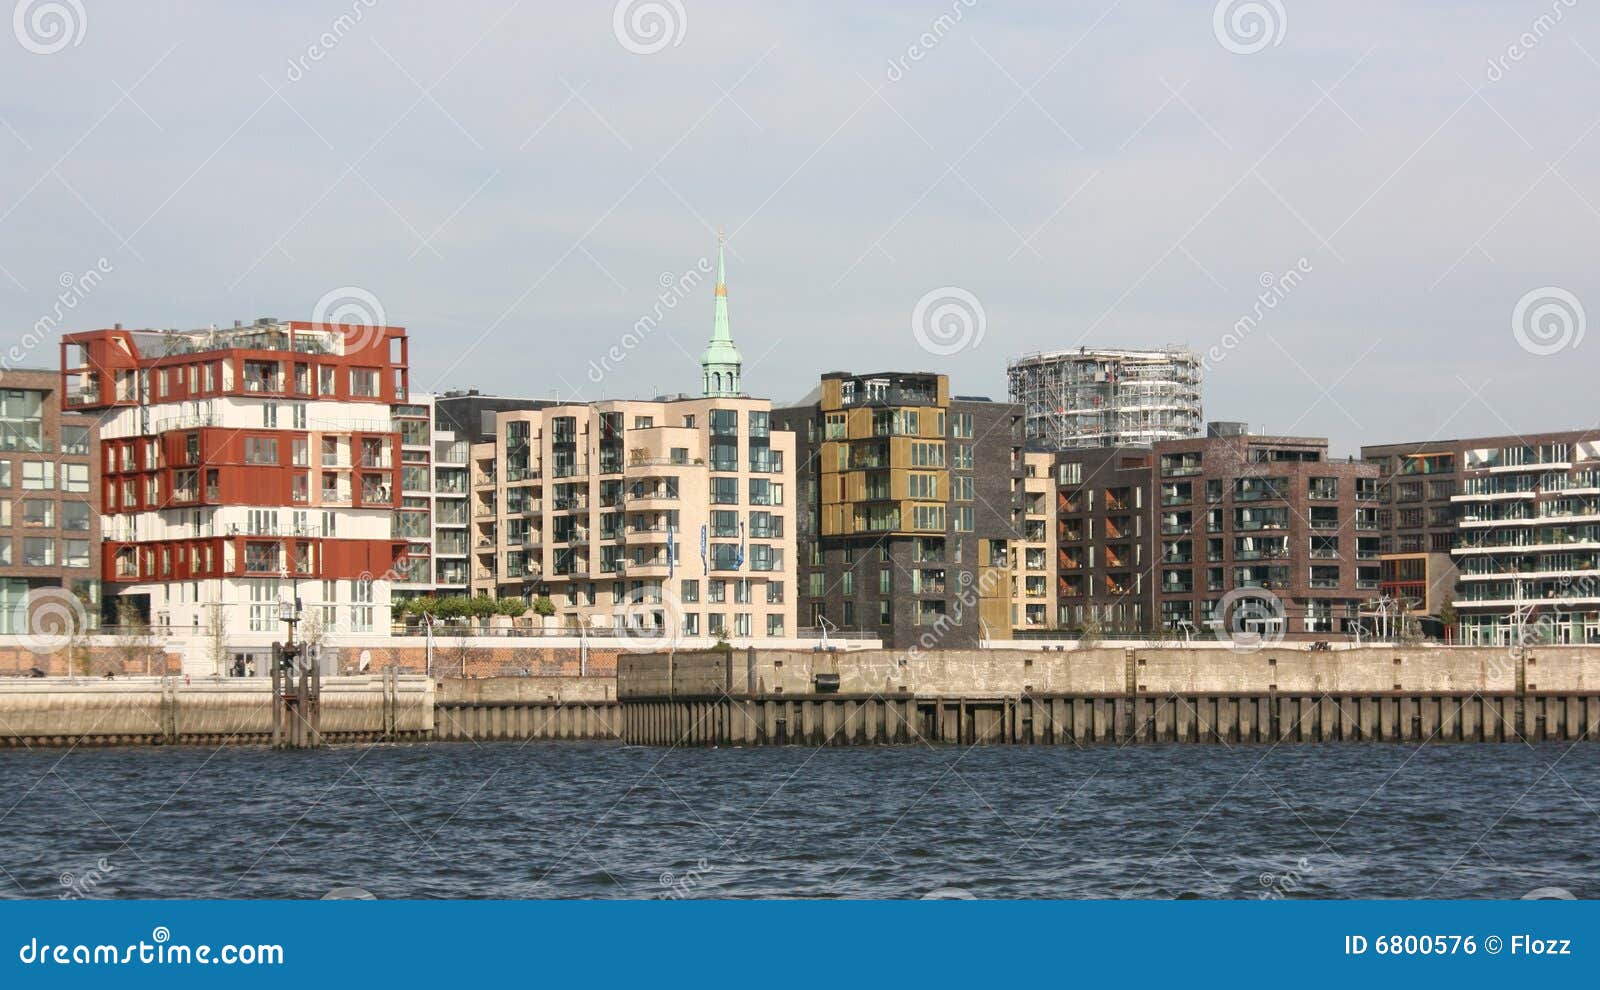 Modern houses skyline. Modern houses built in year 2008 in the harbour city of hamburg, germany